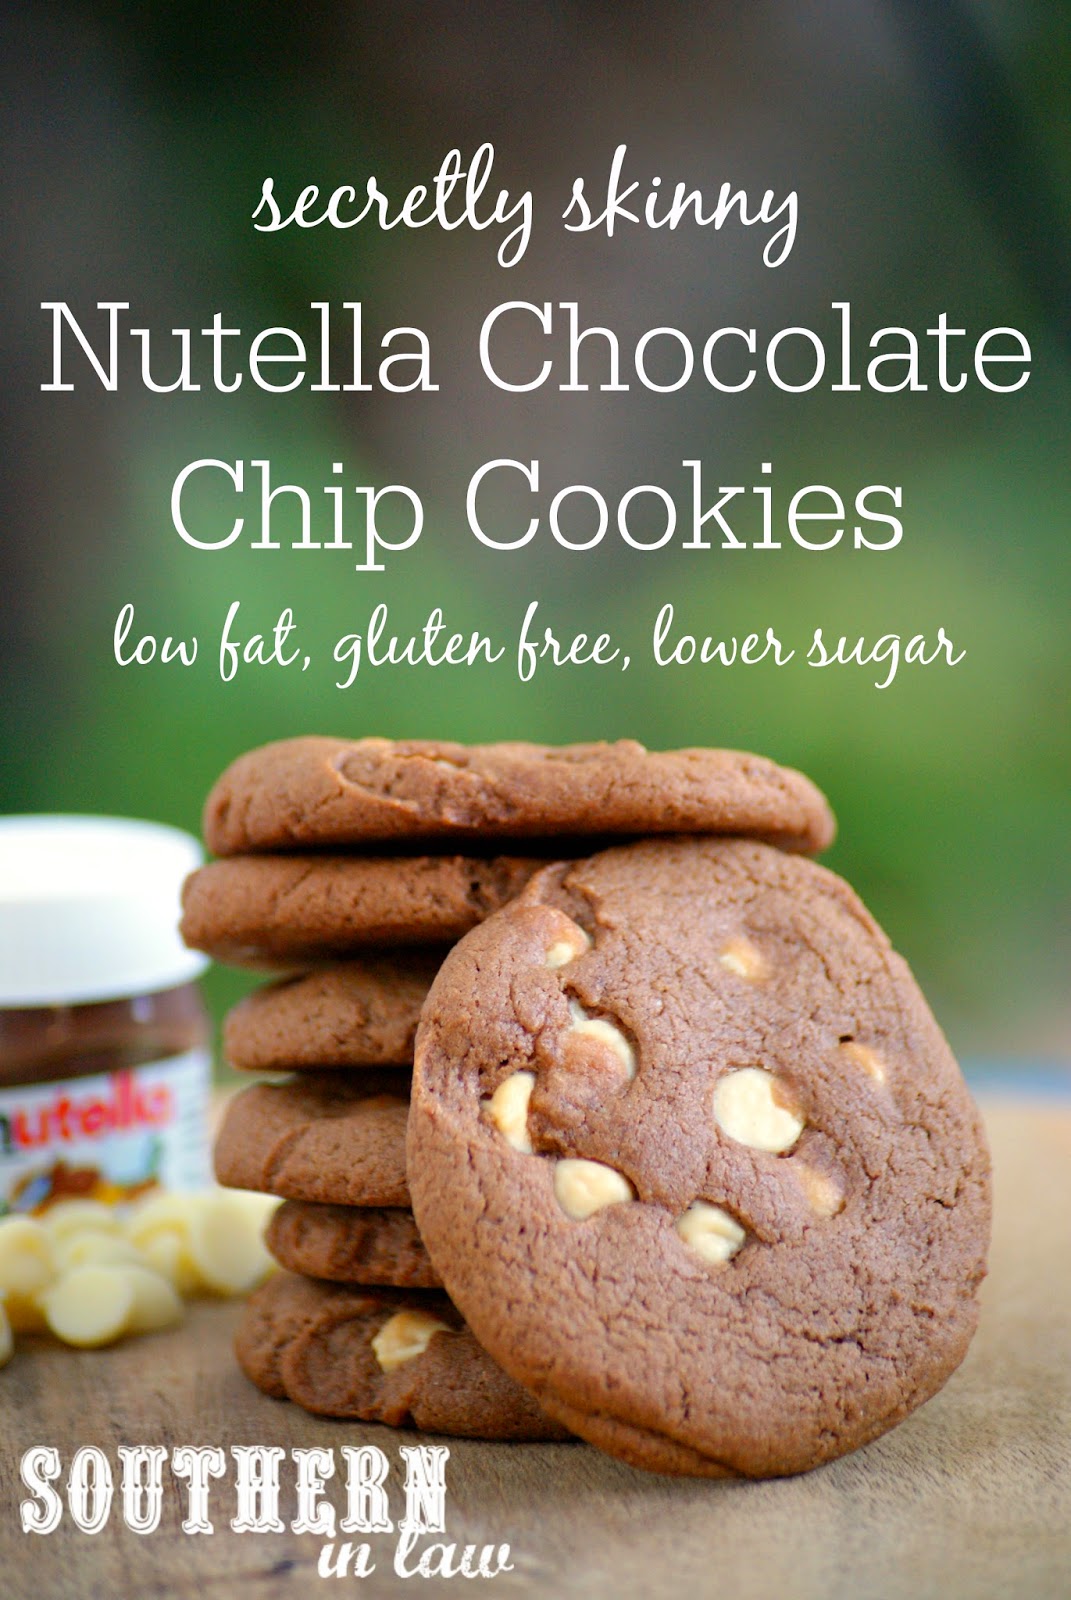 Secretly Skinny Gluten Free Nutella Chocolate Chip Cookie Recipe - low fat, gluten free, lower sugar